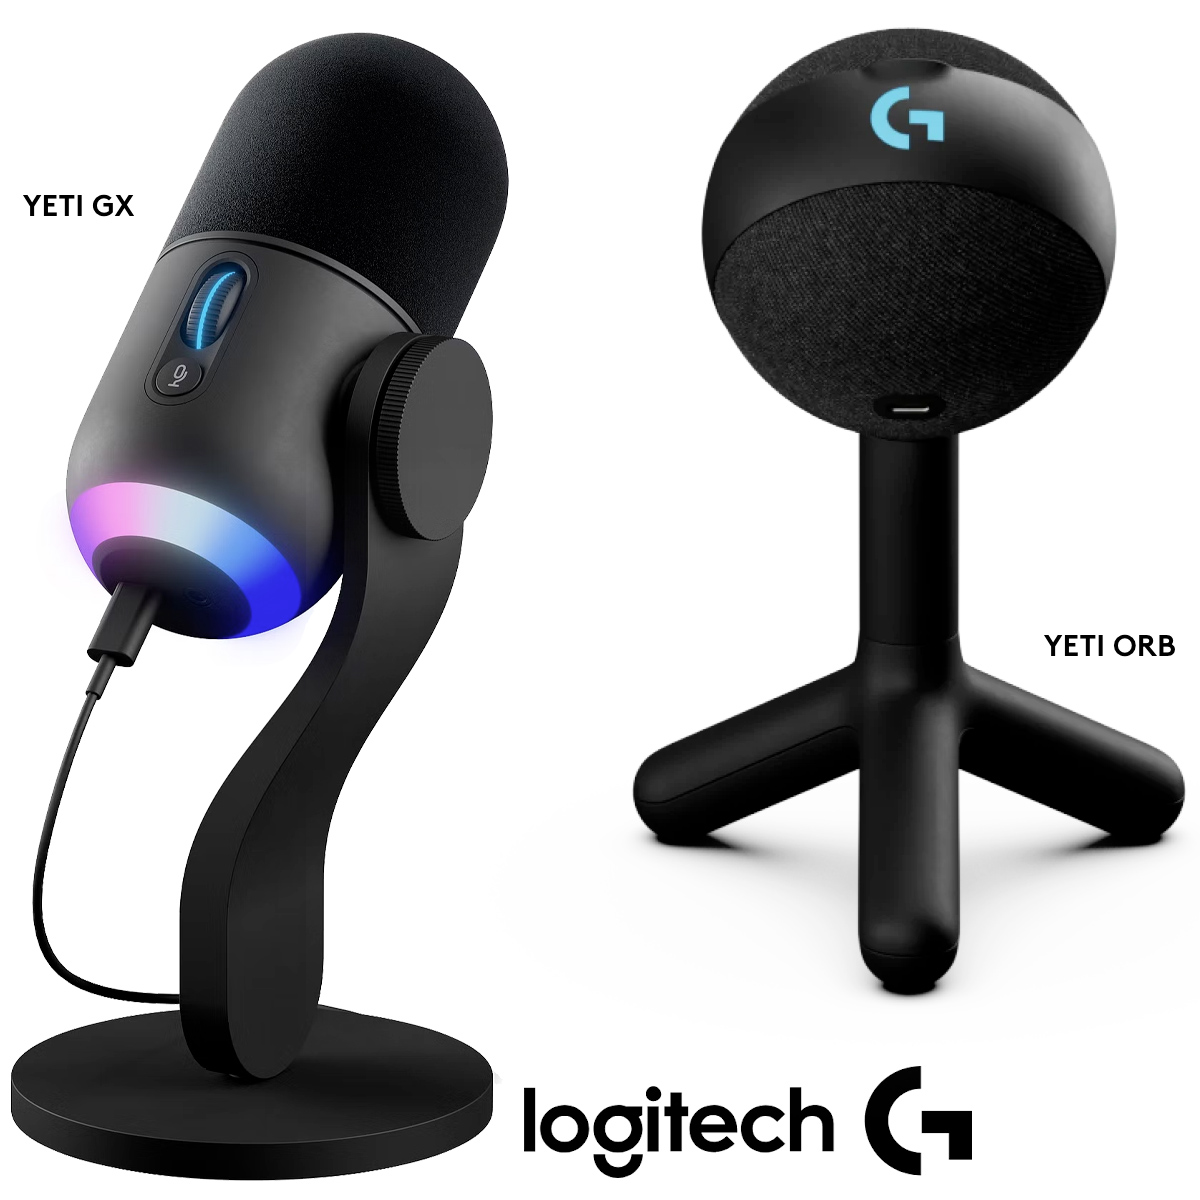 Microfones RGB Logitech G Yeti GX e Yeti Orb para streaming de